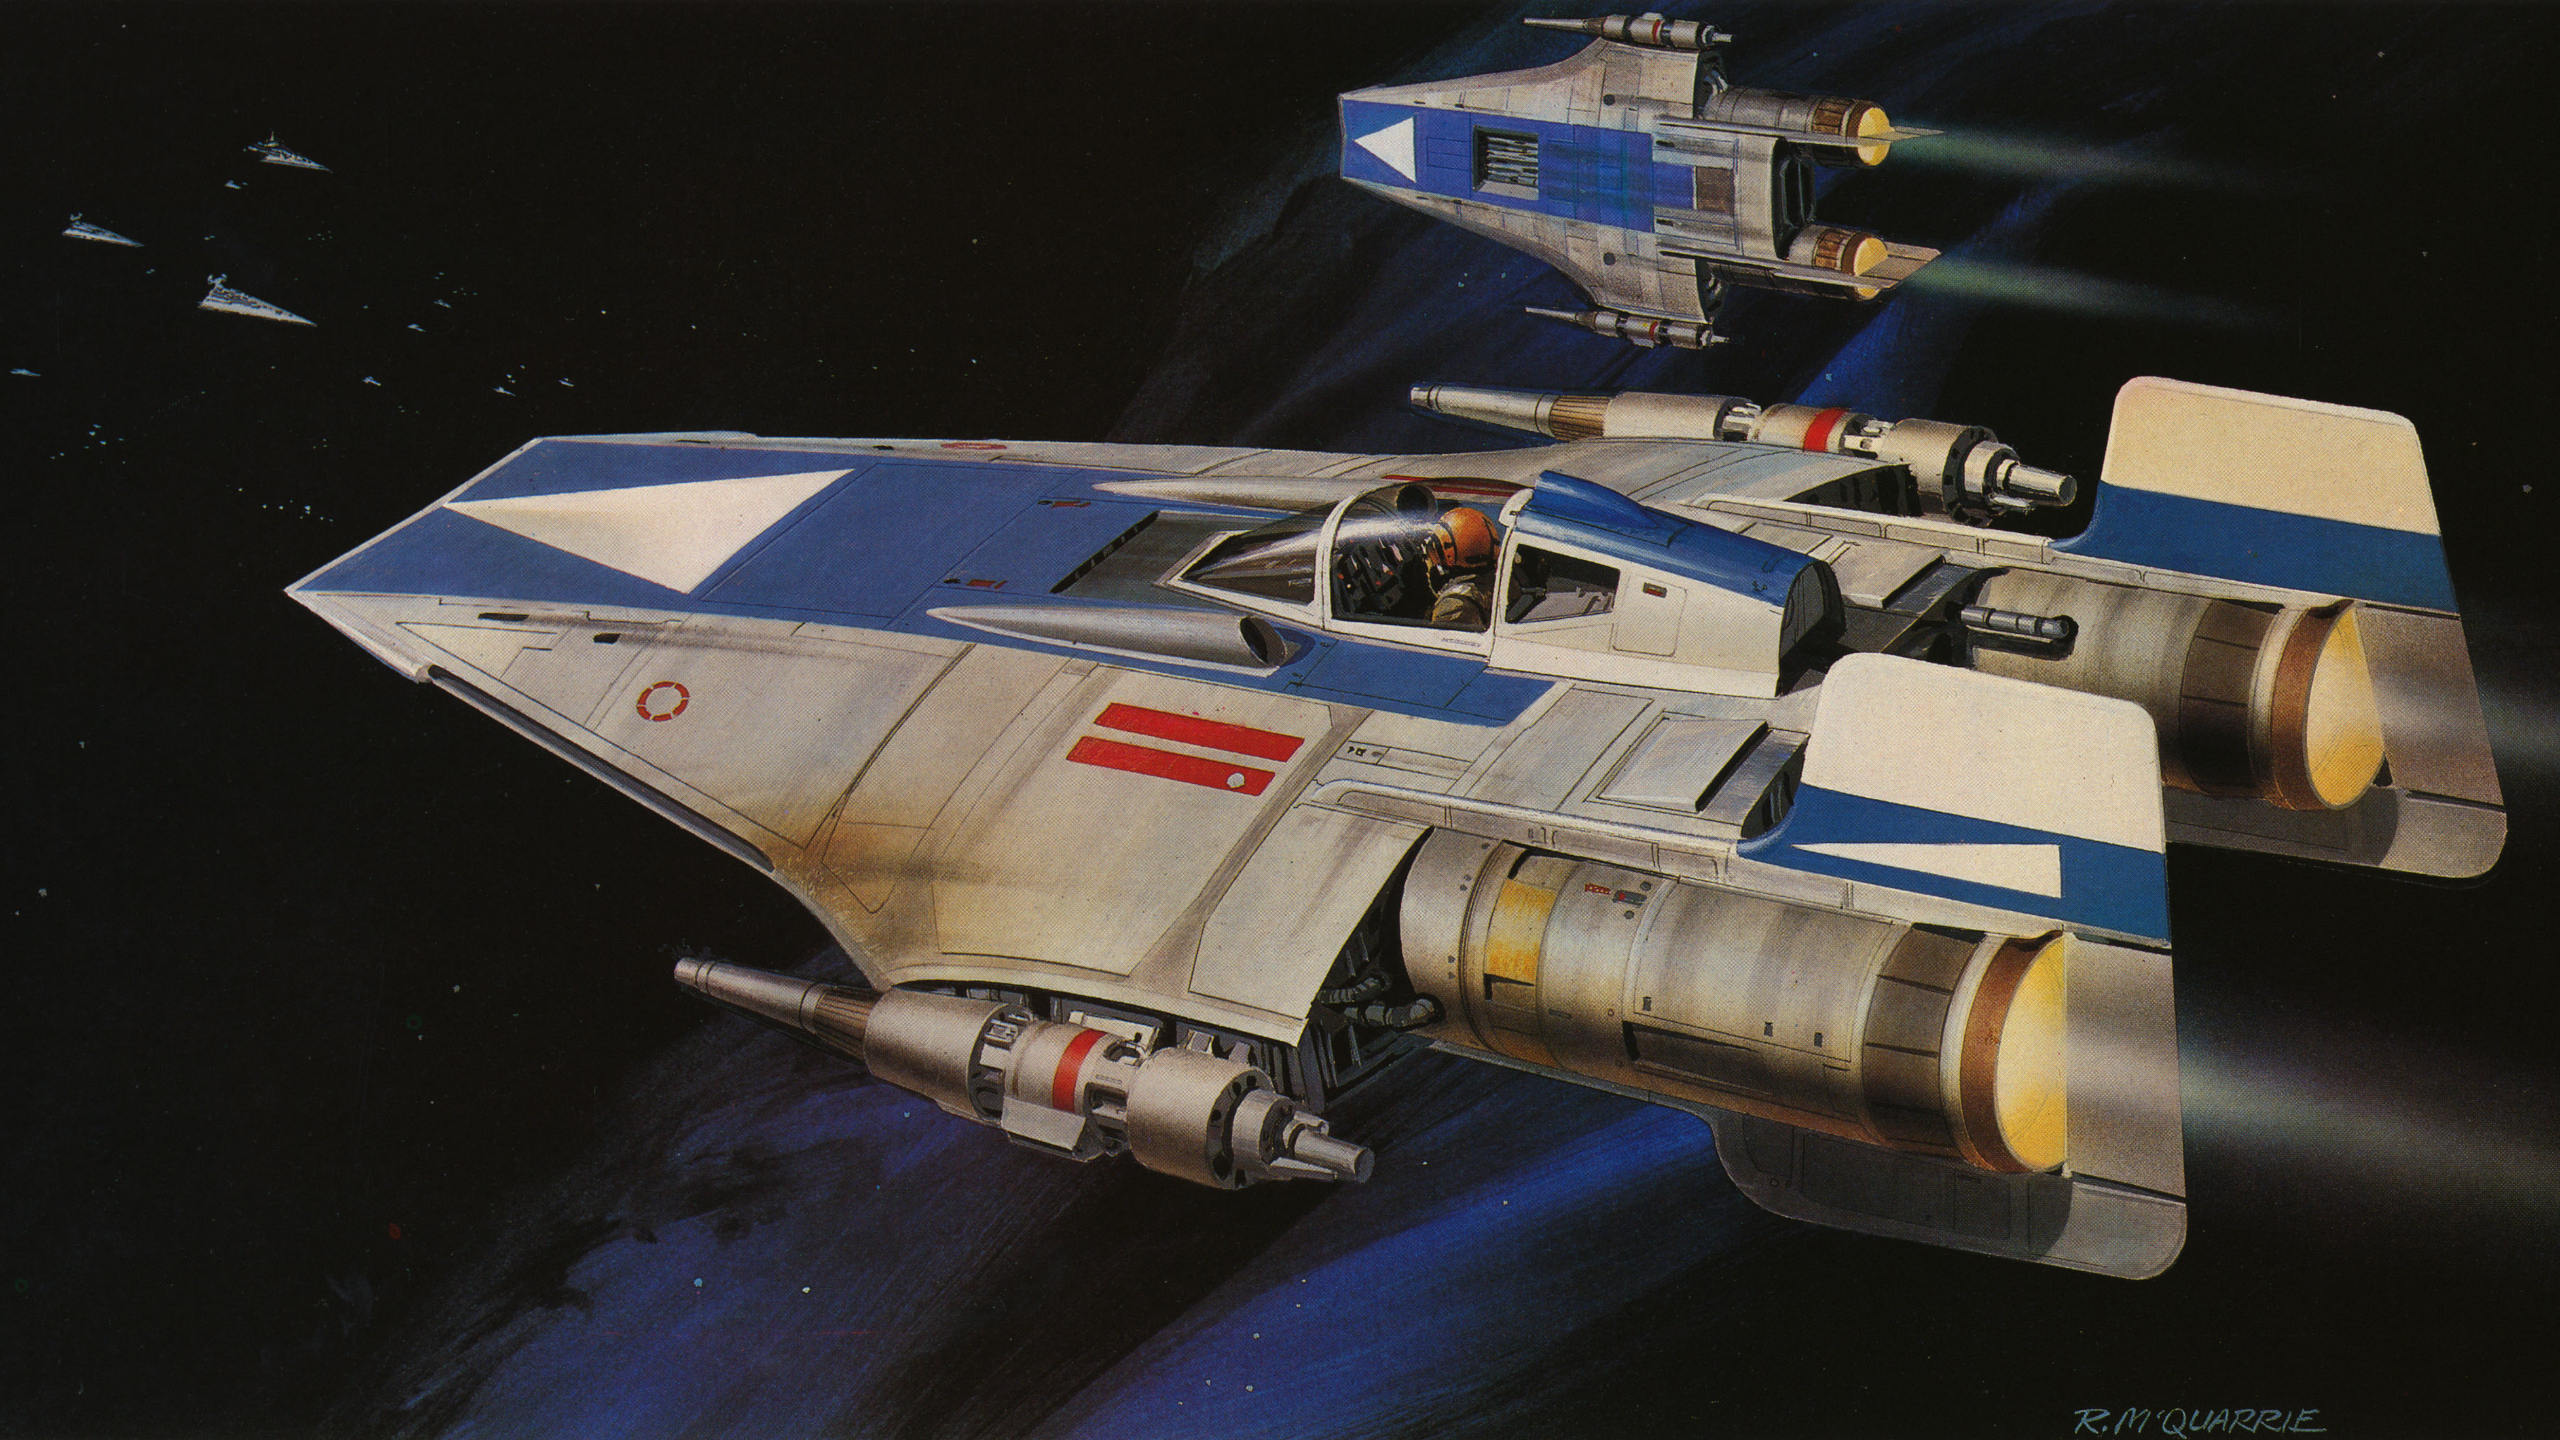 Star Wars A Wing Rebel Alliance Artwork Spaceship Ralph McQuarrie 2560x1440